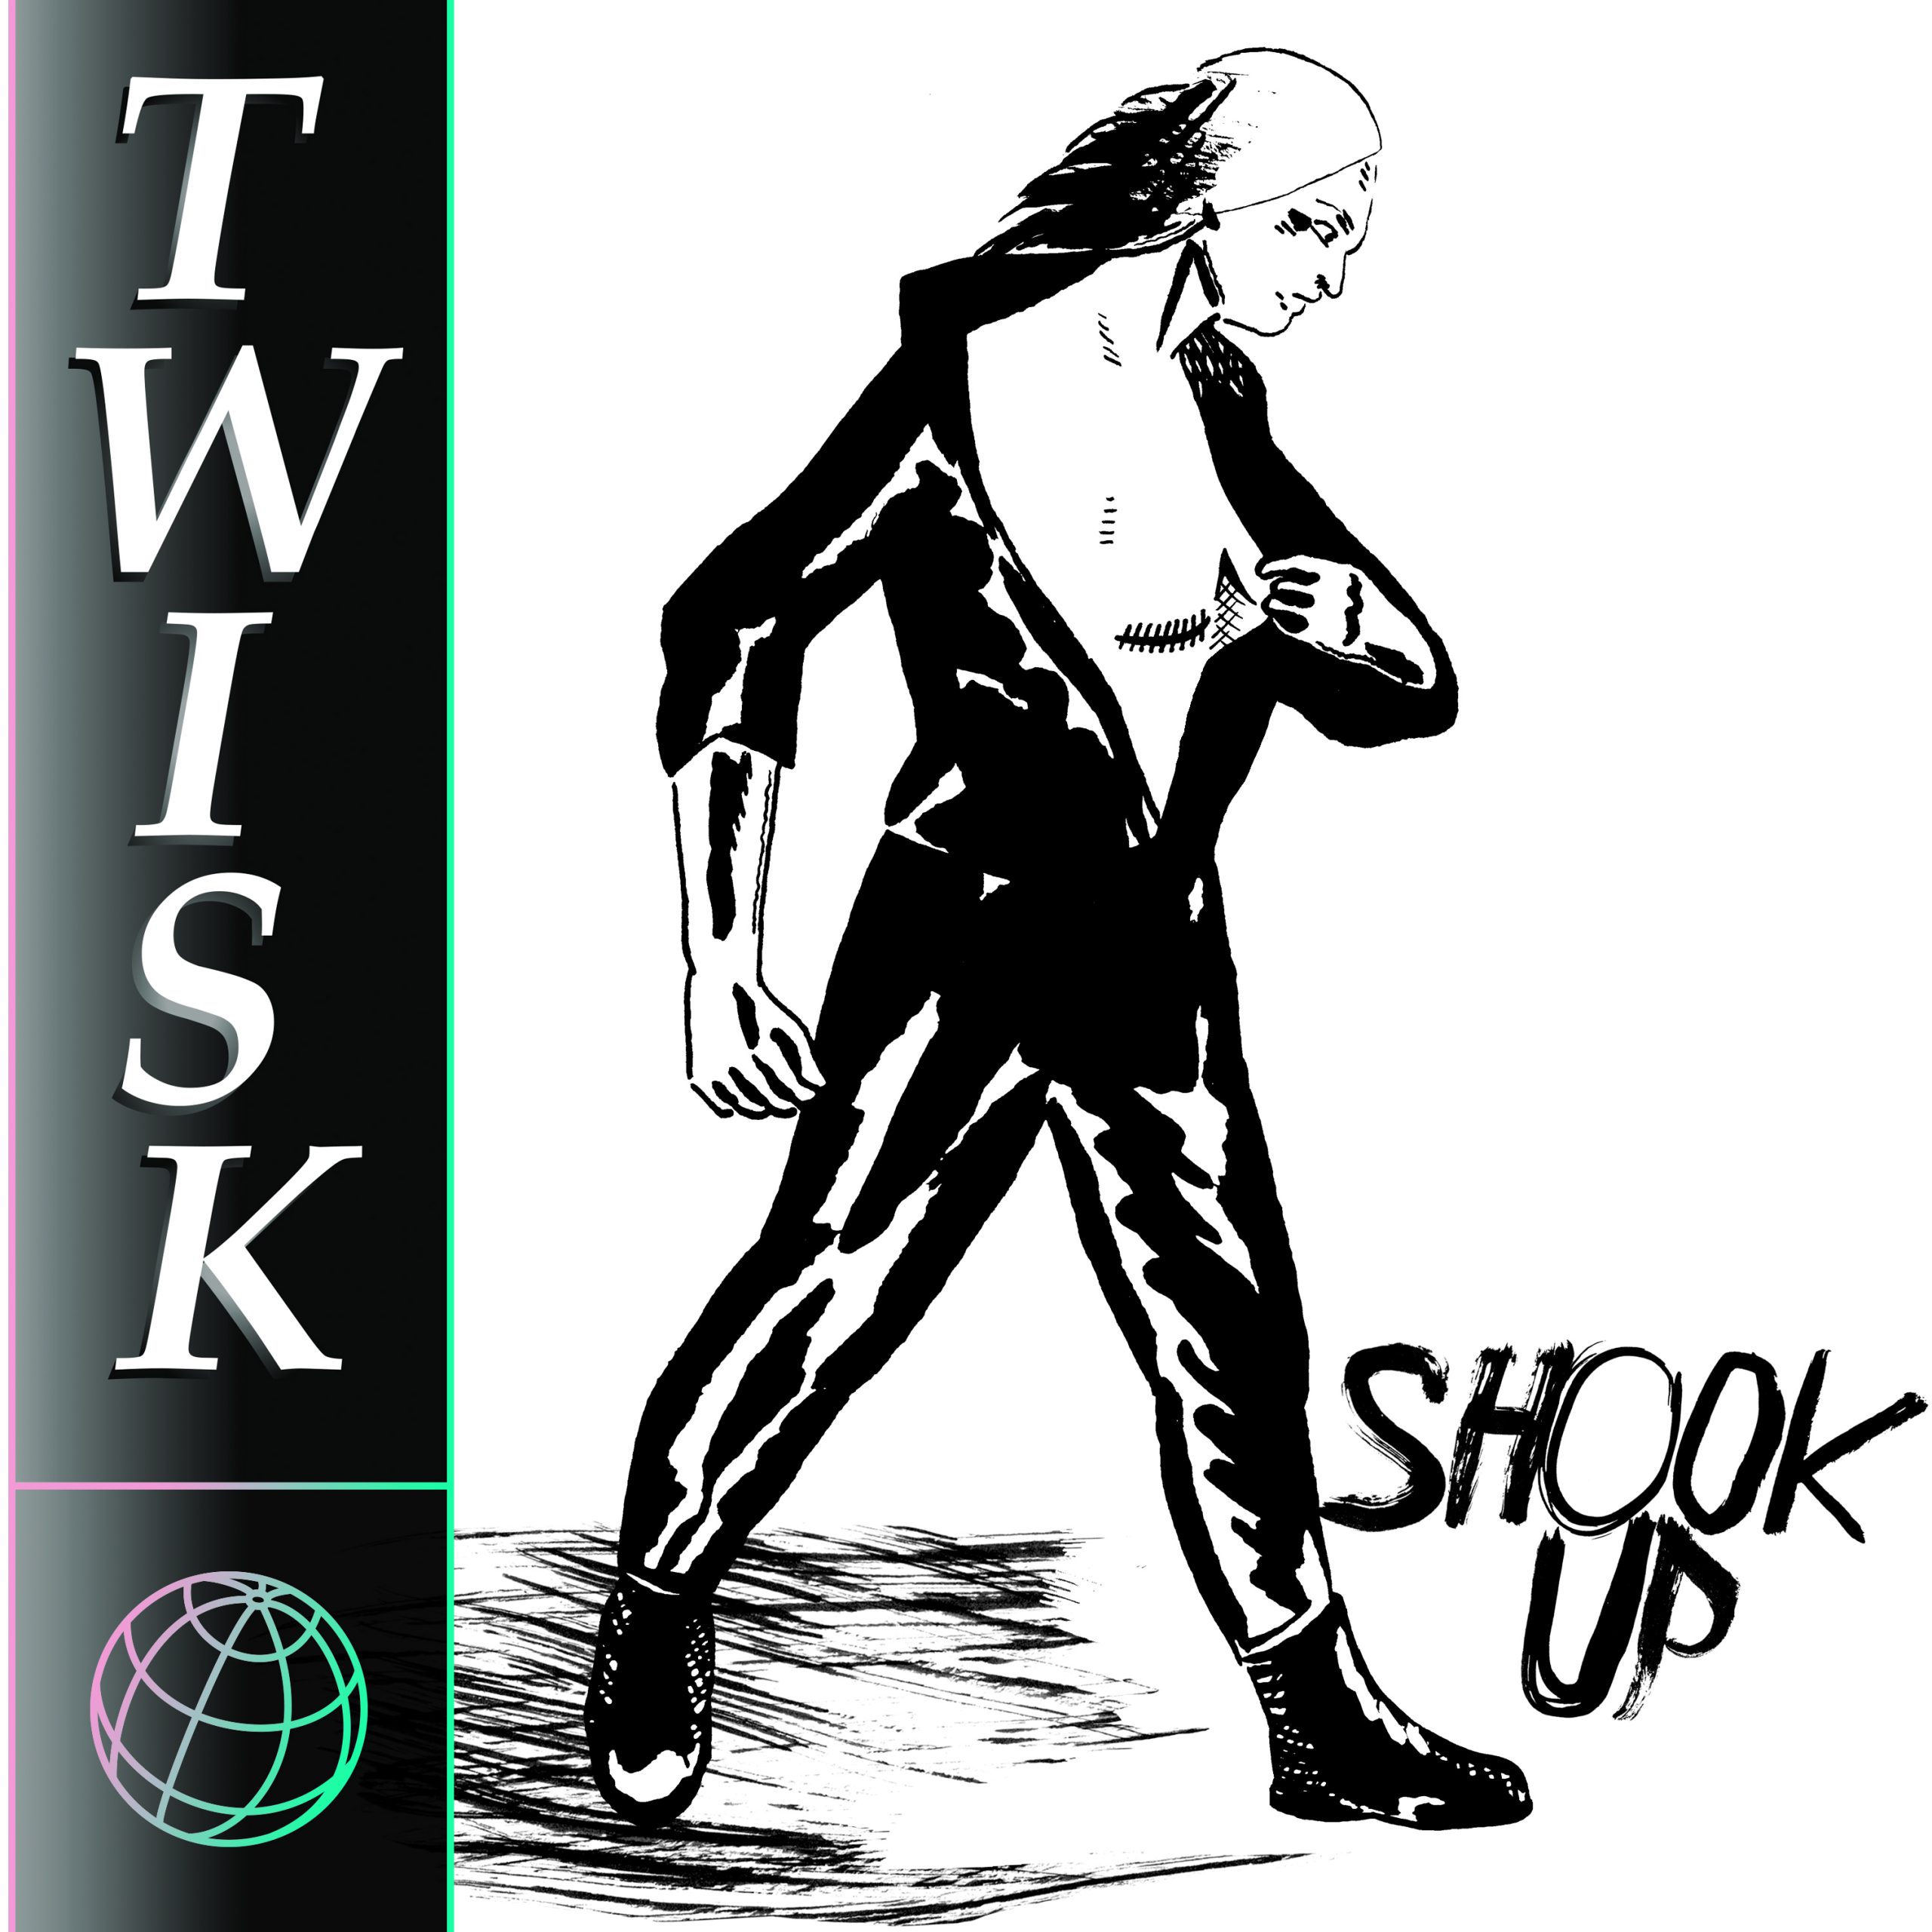 TWISK – SHOOK UP (Single)